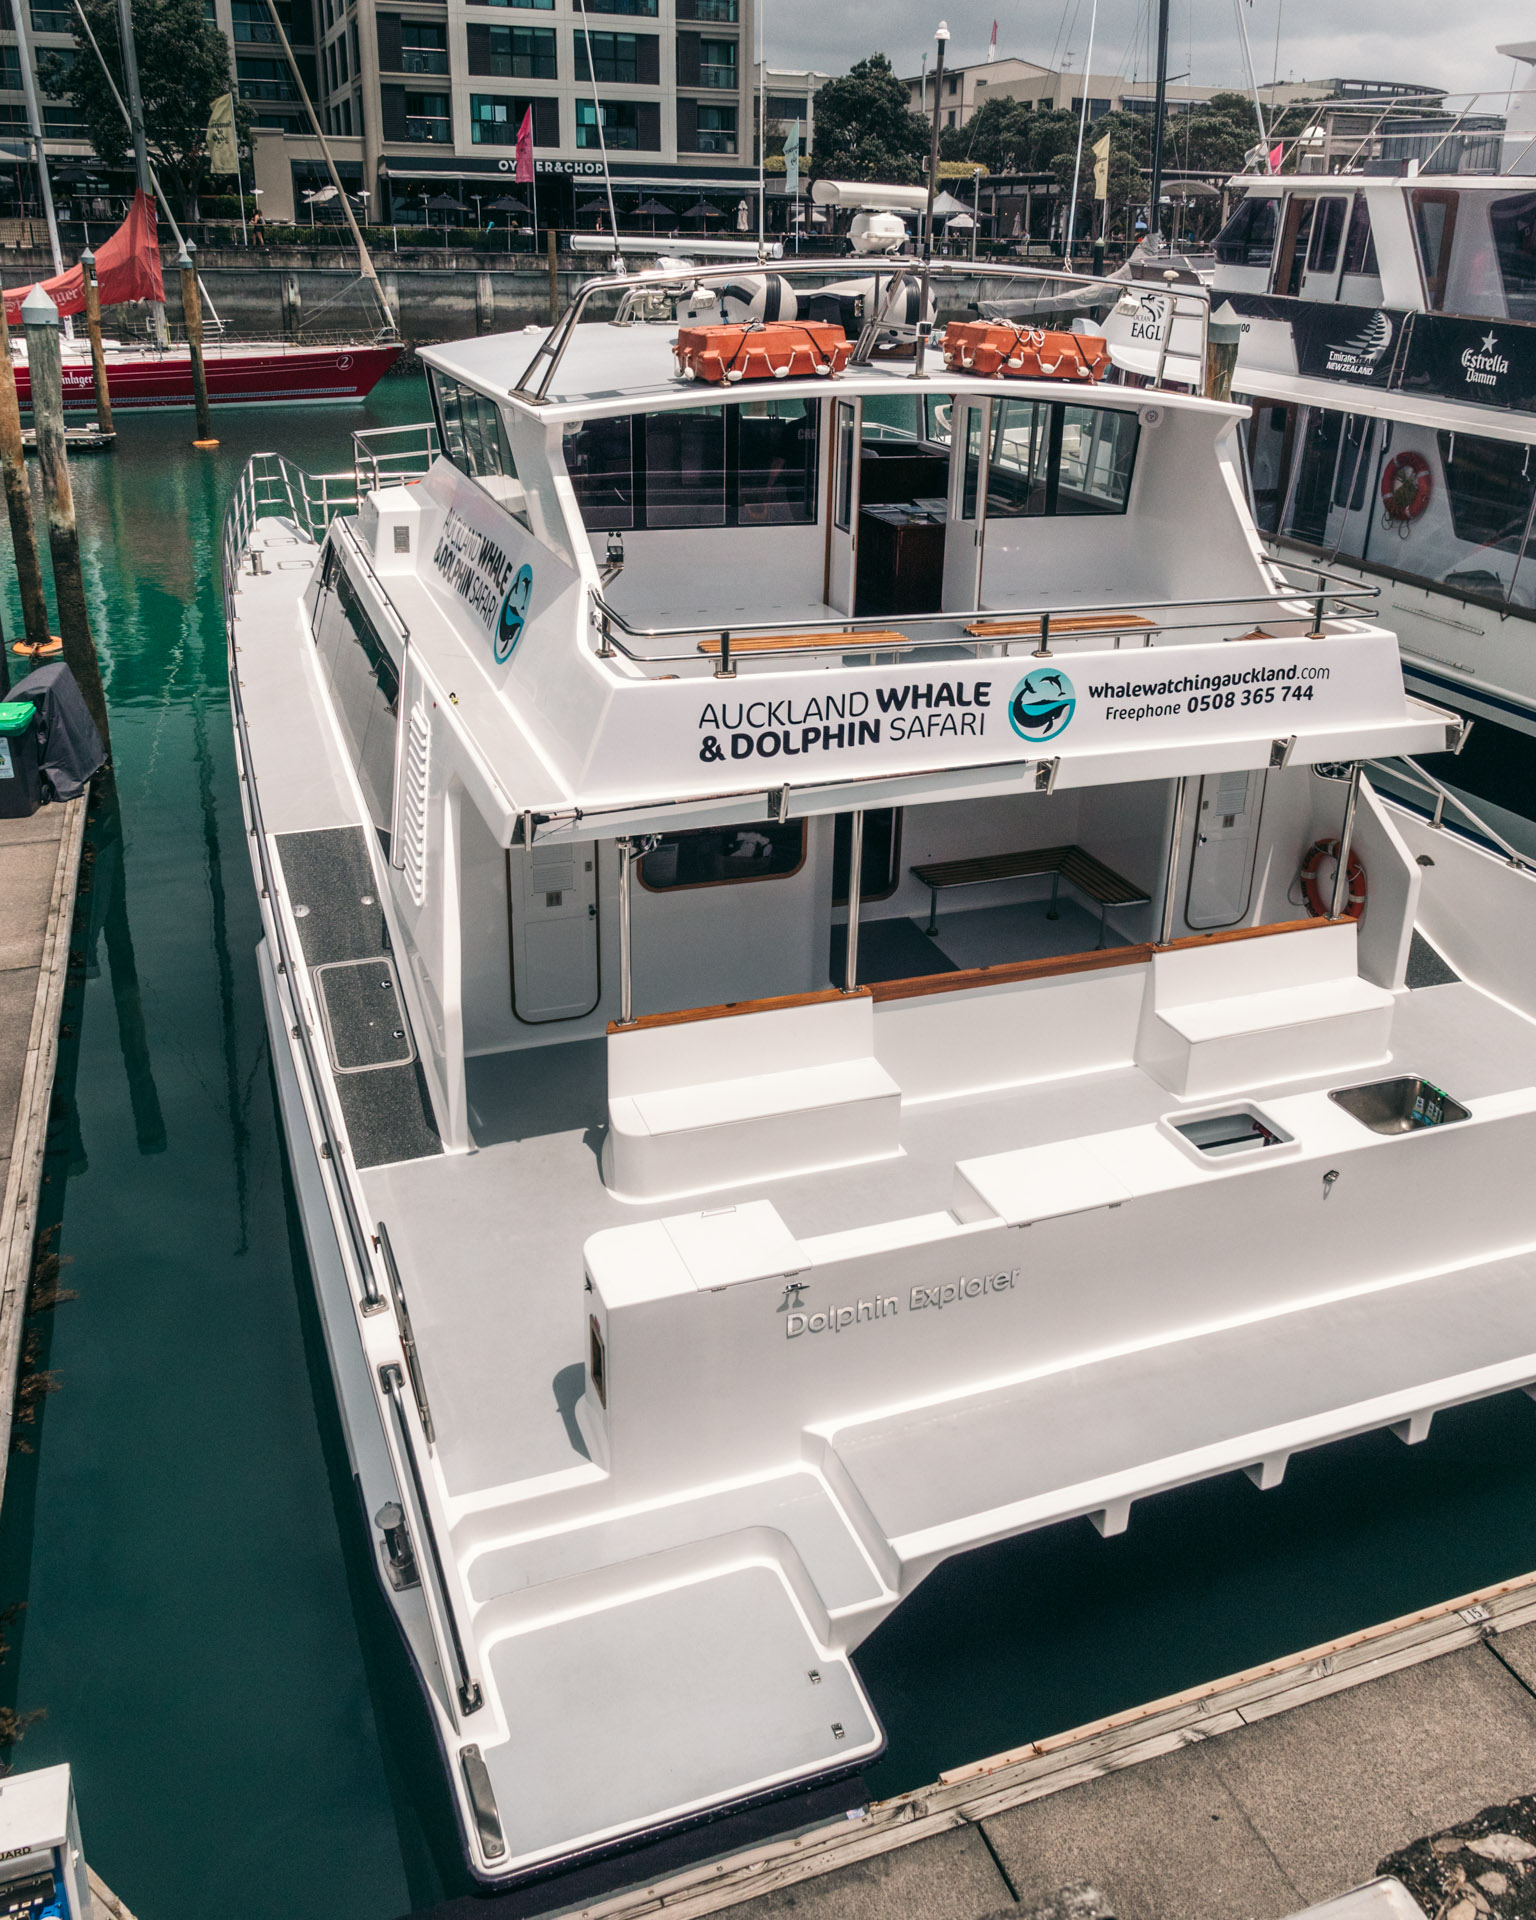 Auckland Whale & Dolphin Safari's "Dolphin Explorer" boat